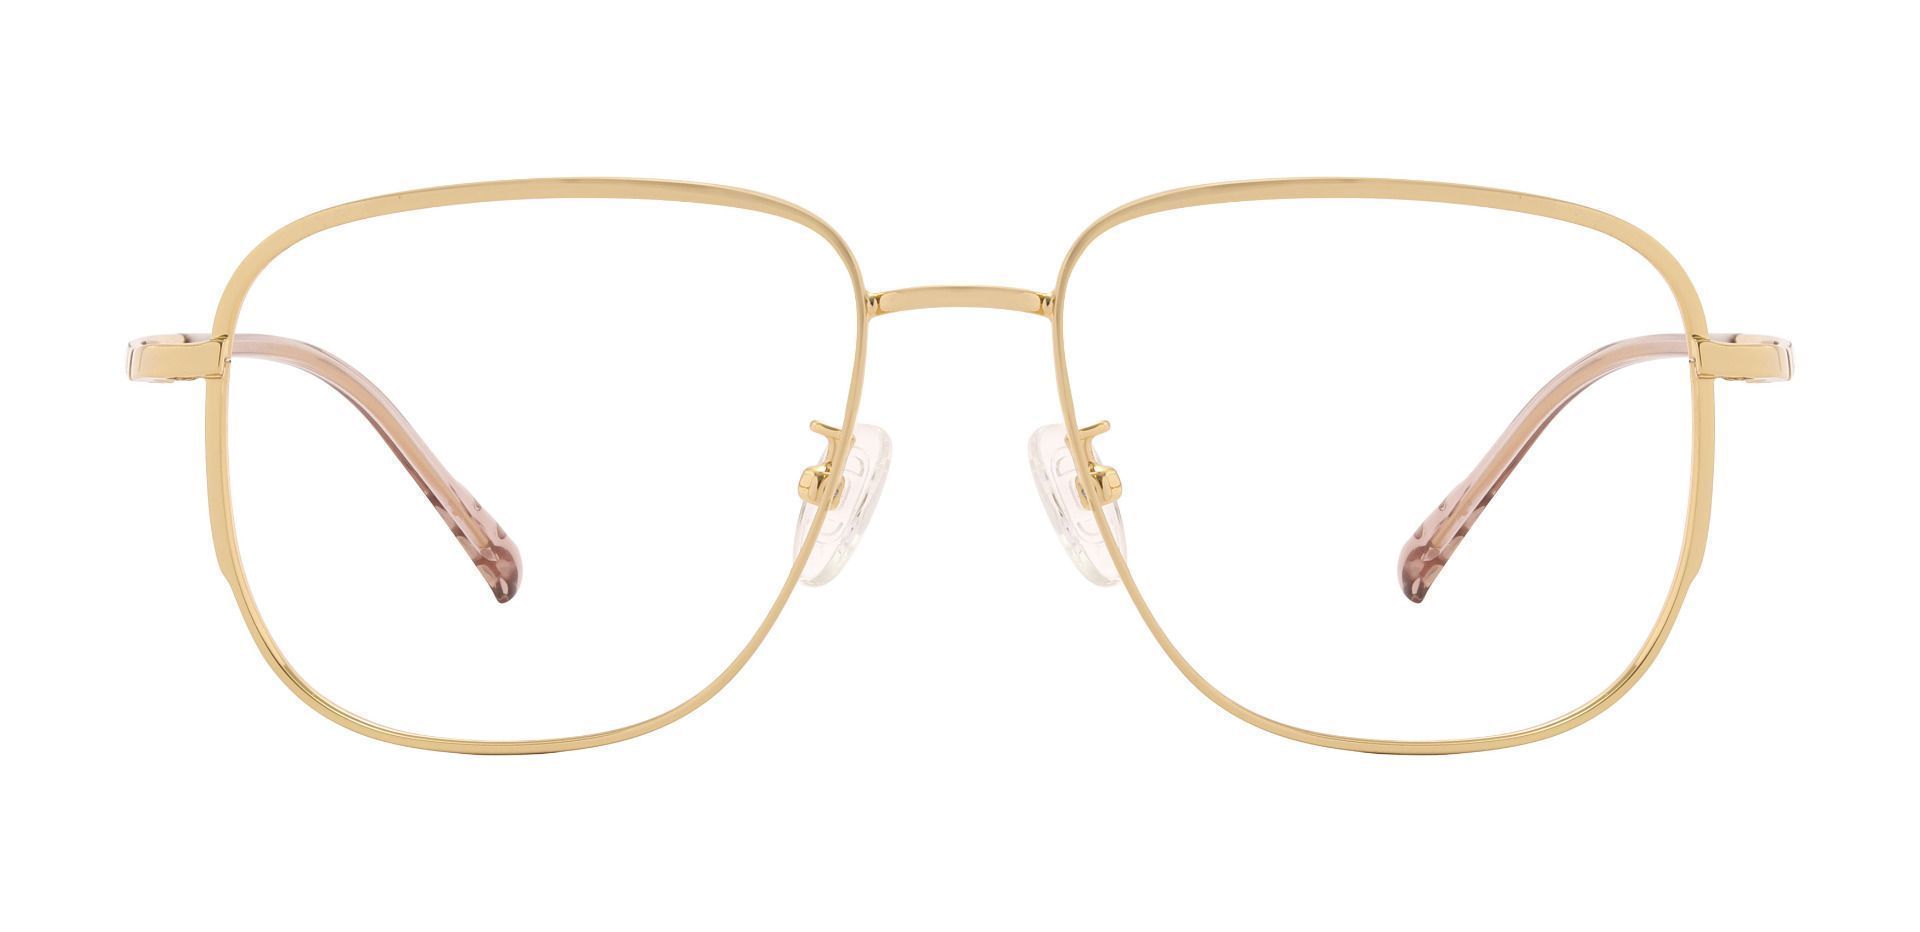 Tucson Square Prescription Glasses - Gold